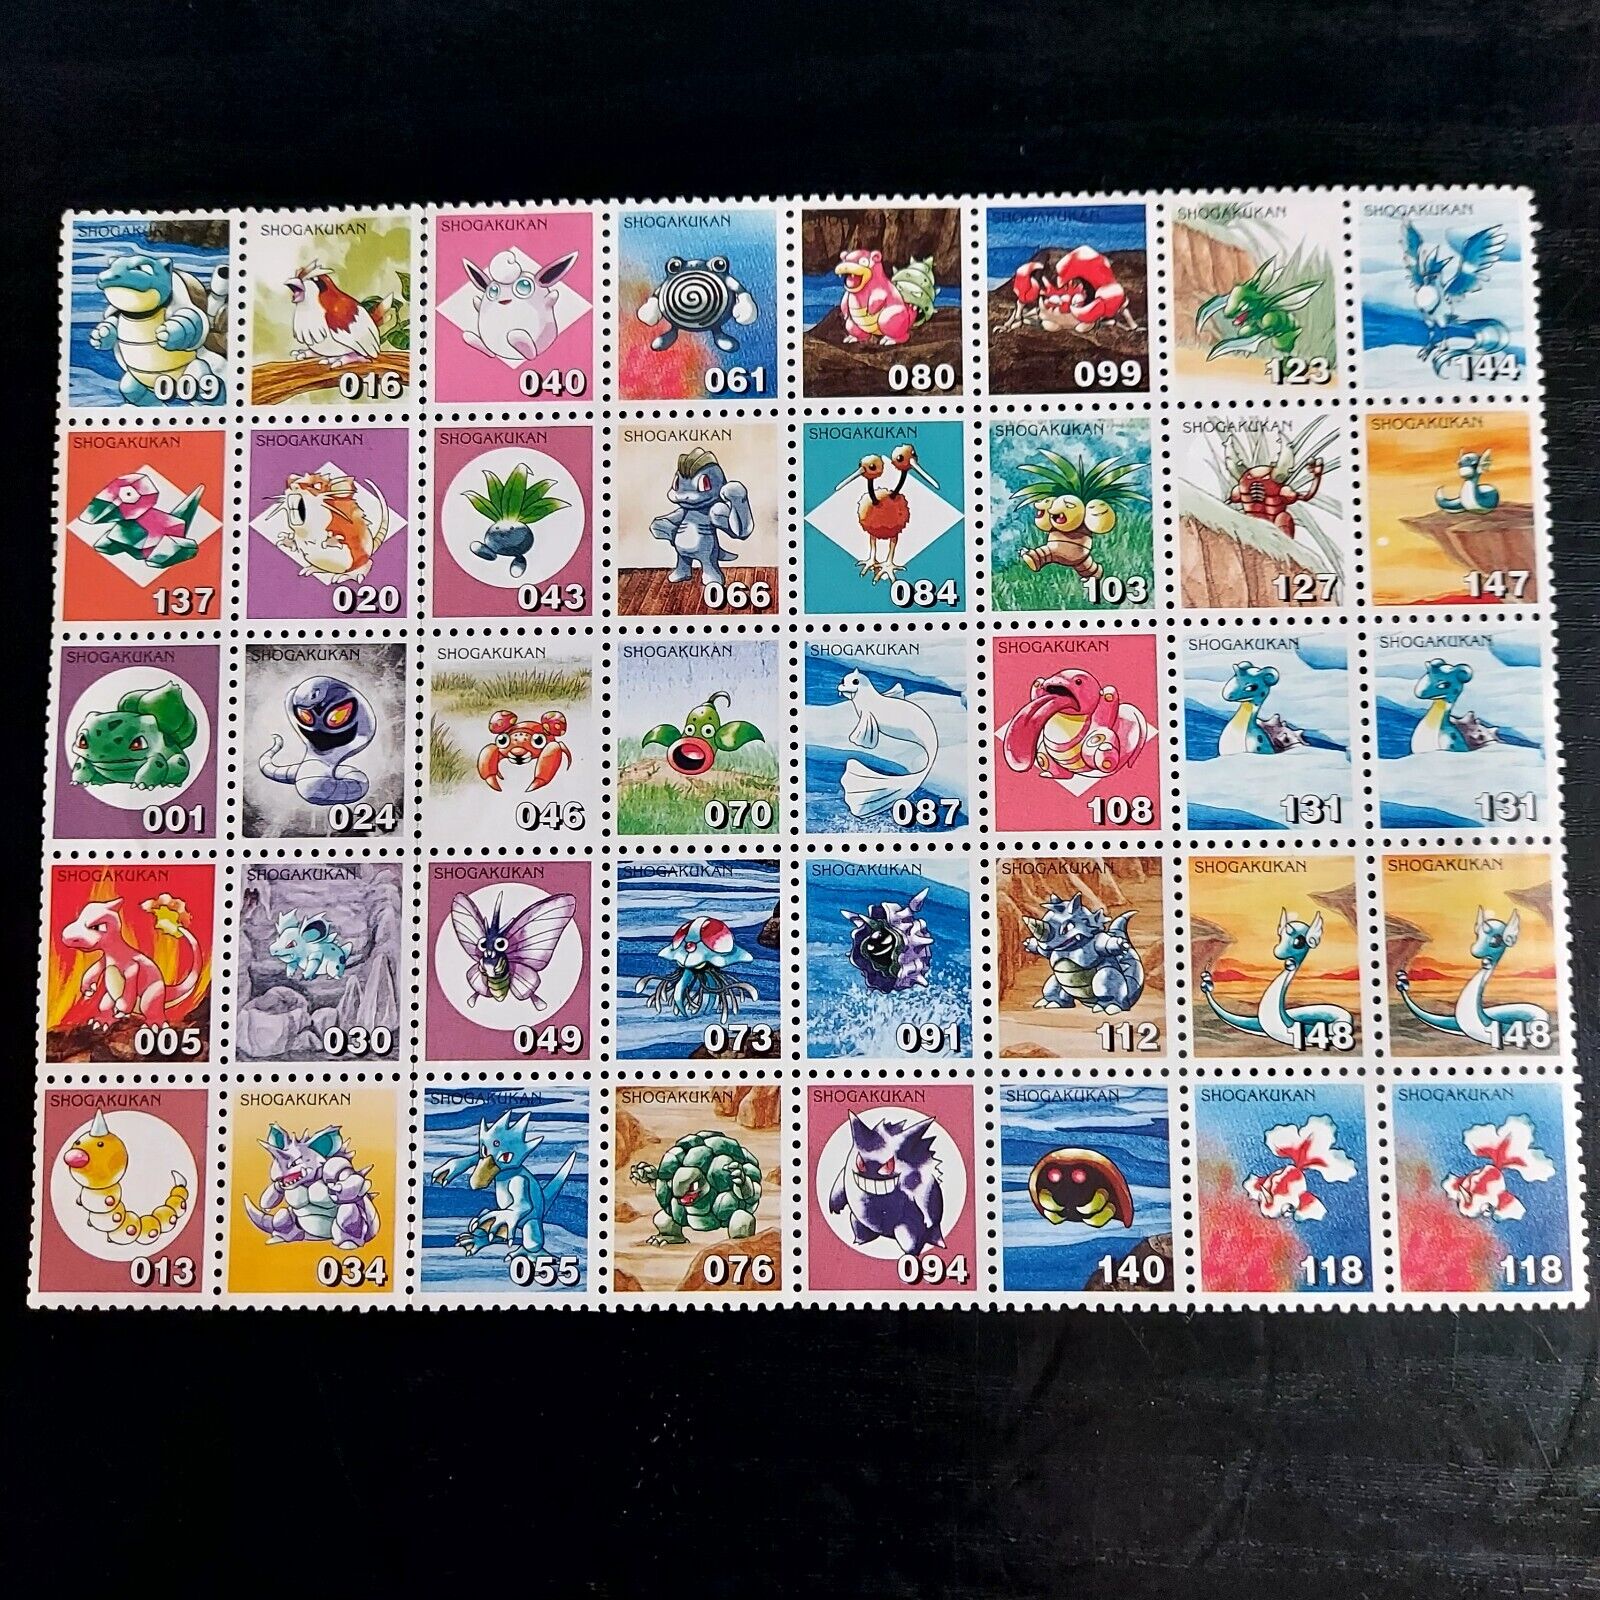 1998 Pokemon cards Shogakukan Stamps uncut base set gengar blastoise collection